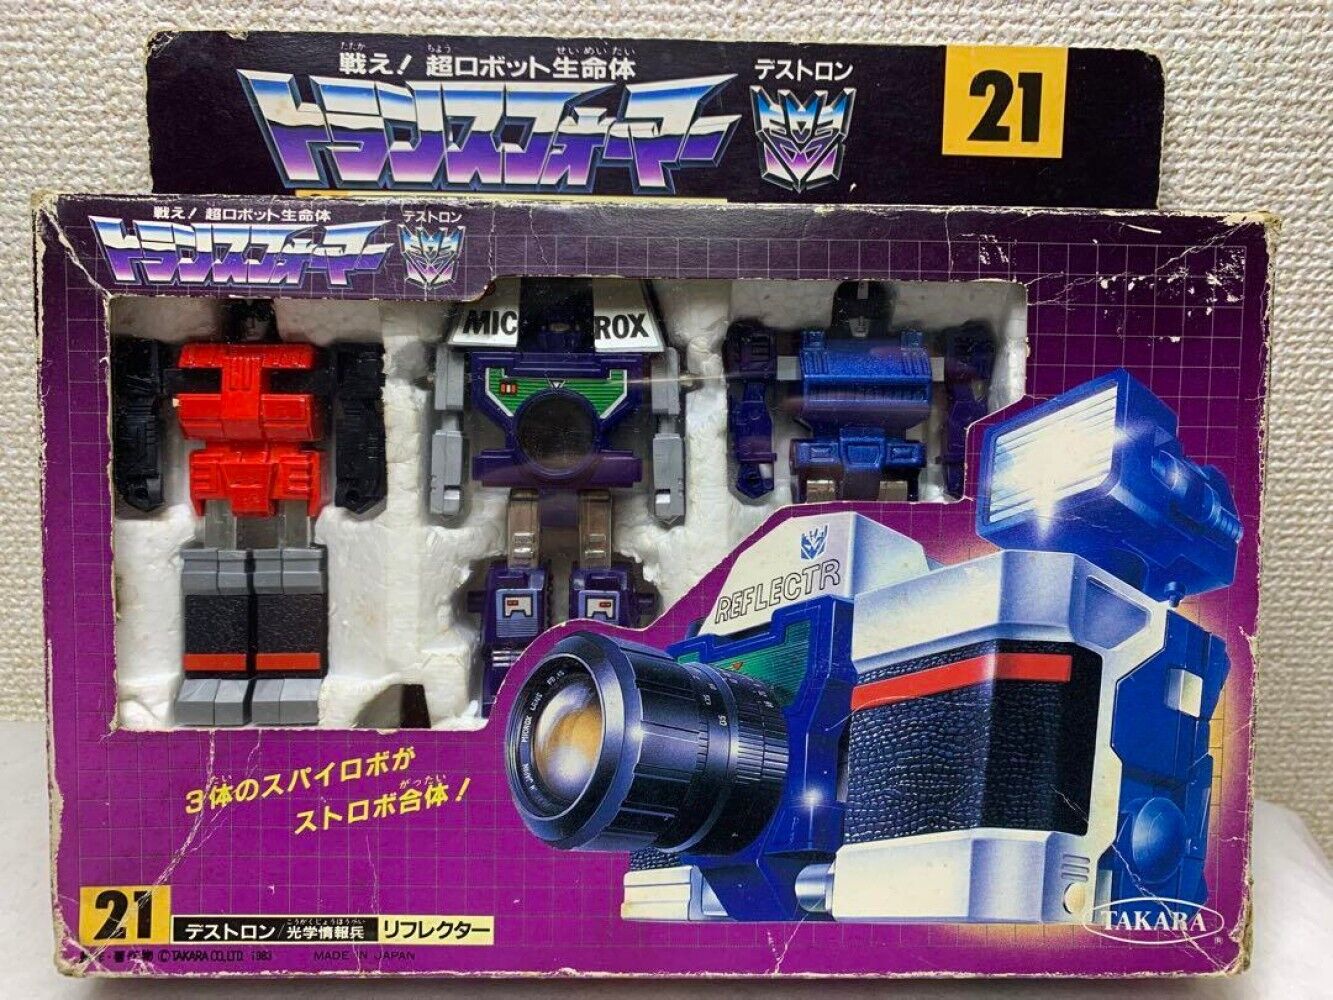 Transformers 21 Reflector G1 Takara Diaclone